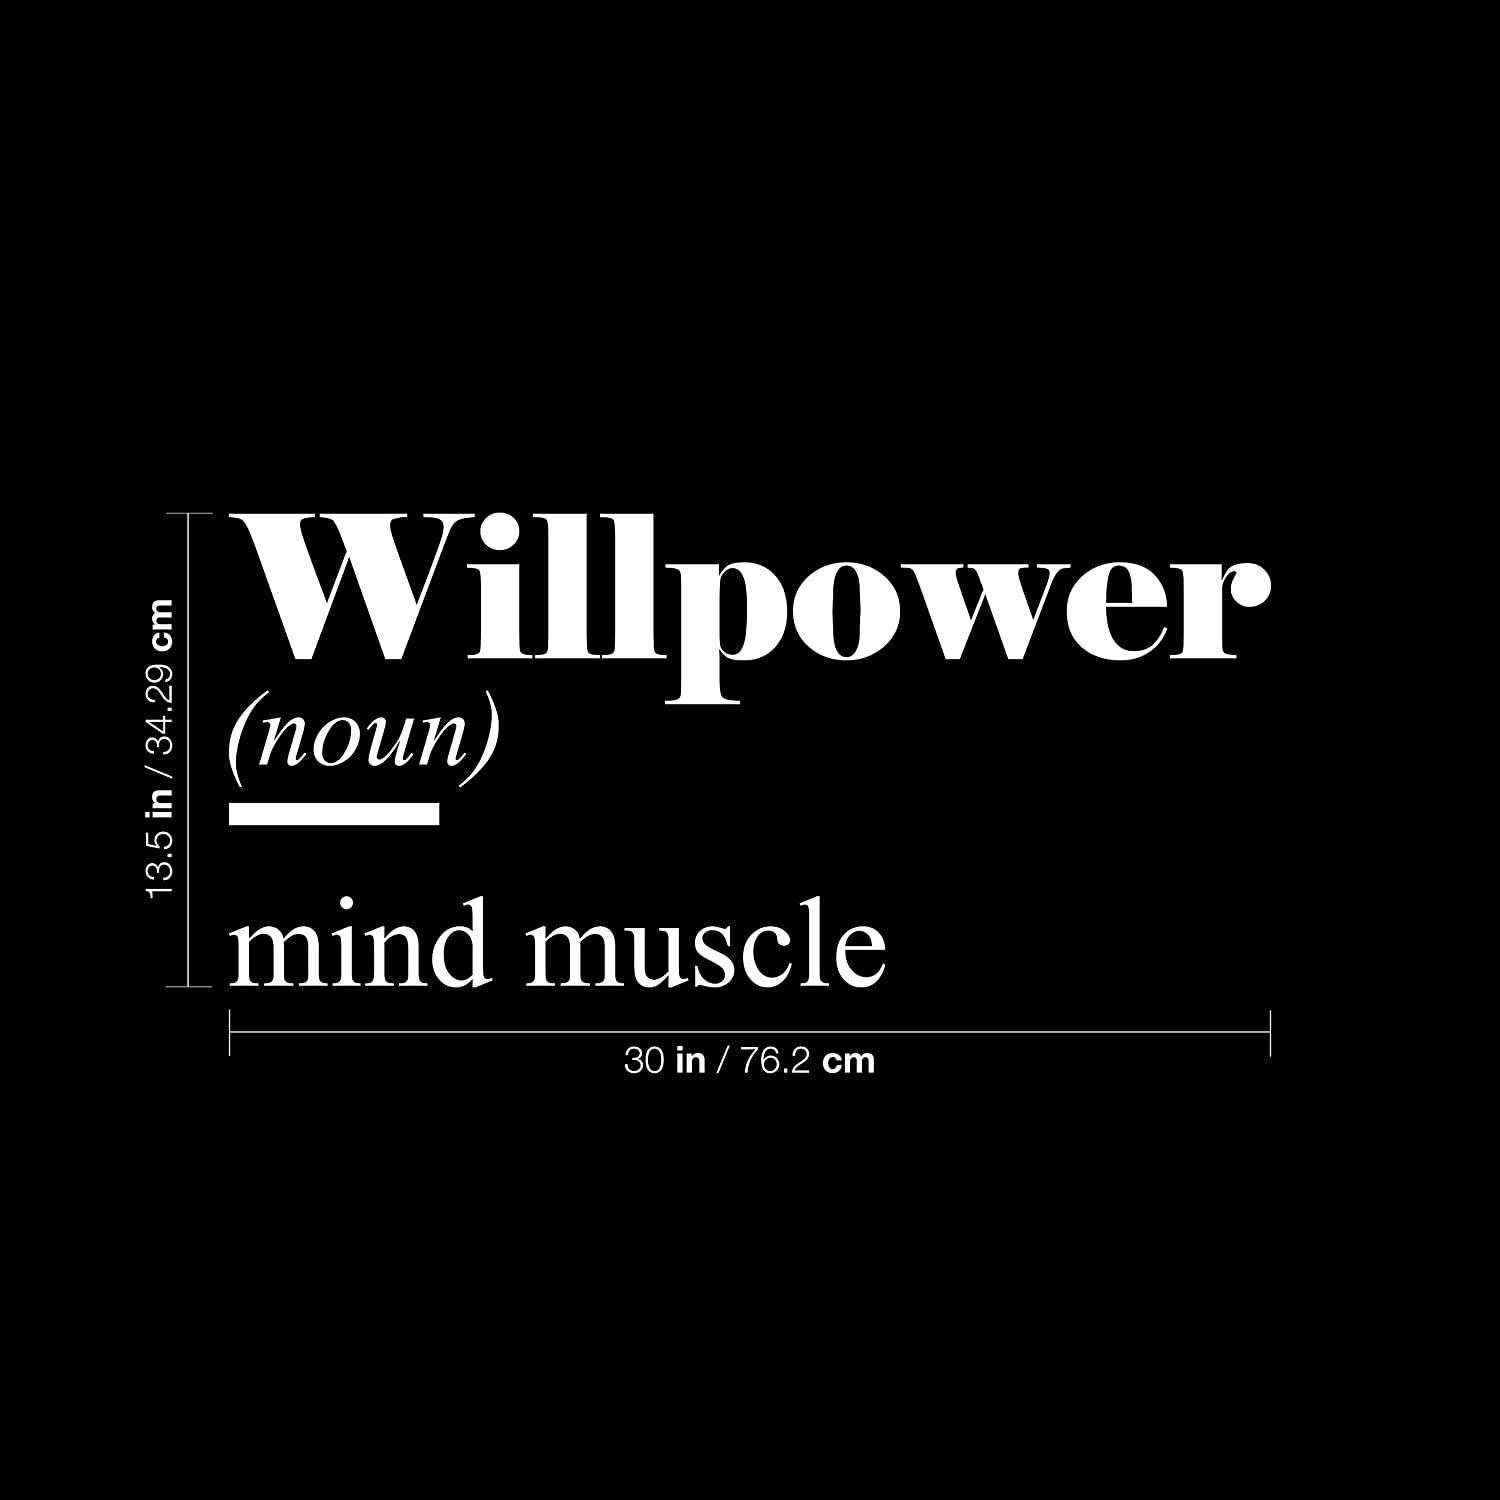 Will Power